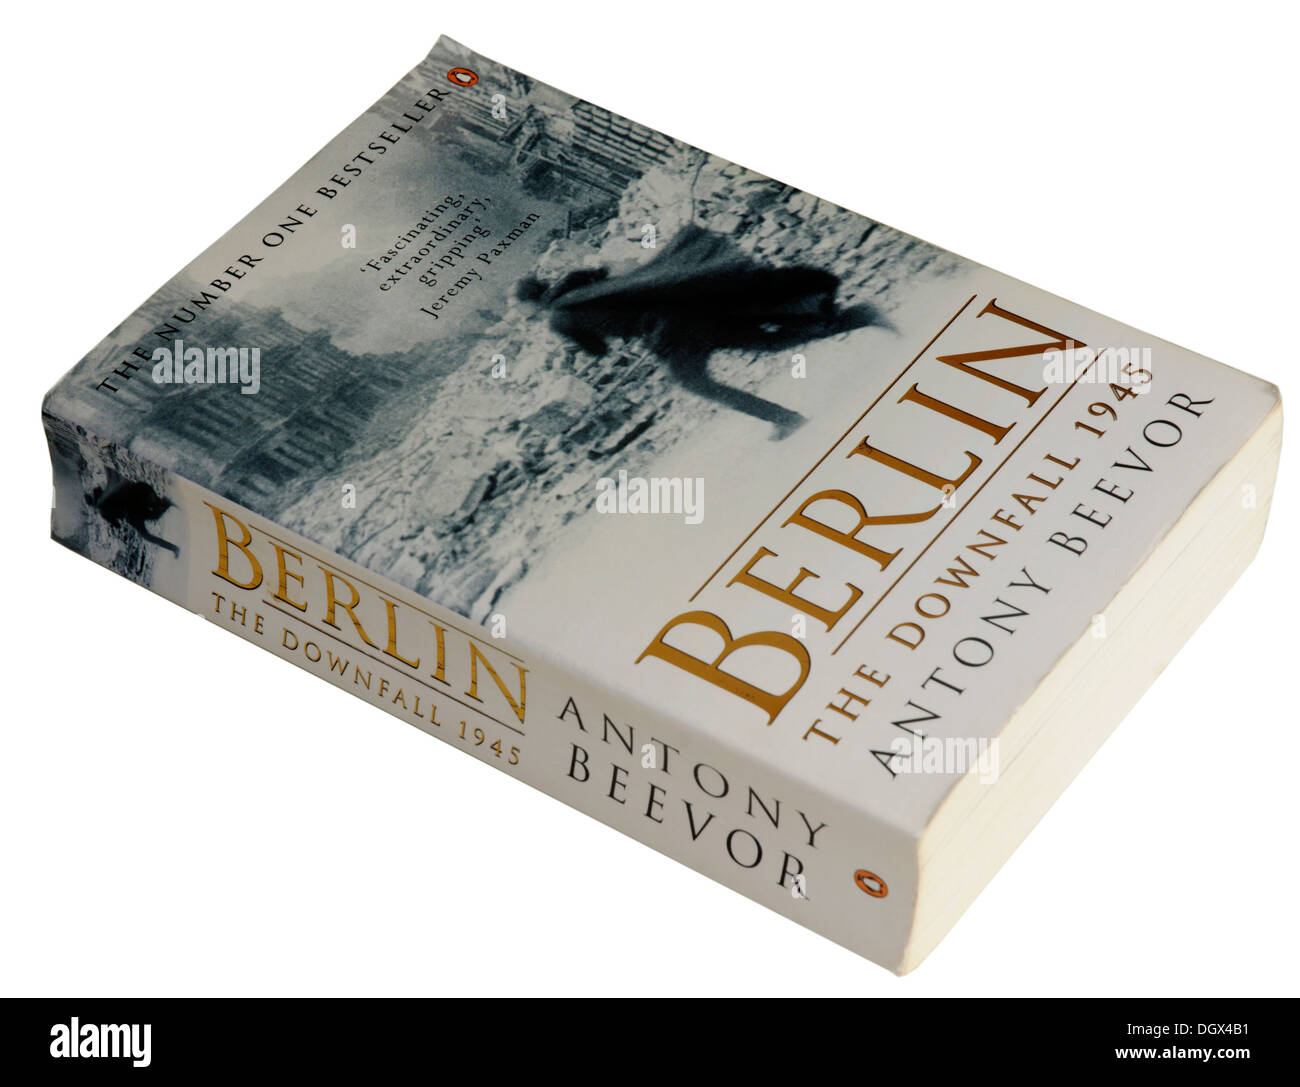 Berlino la caduta 1945 da Antony Beevor Foto Stock